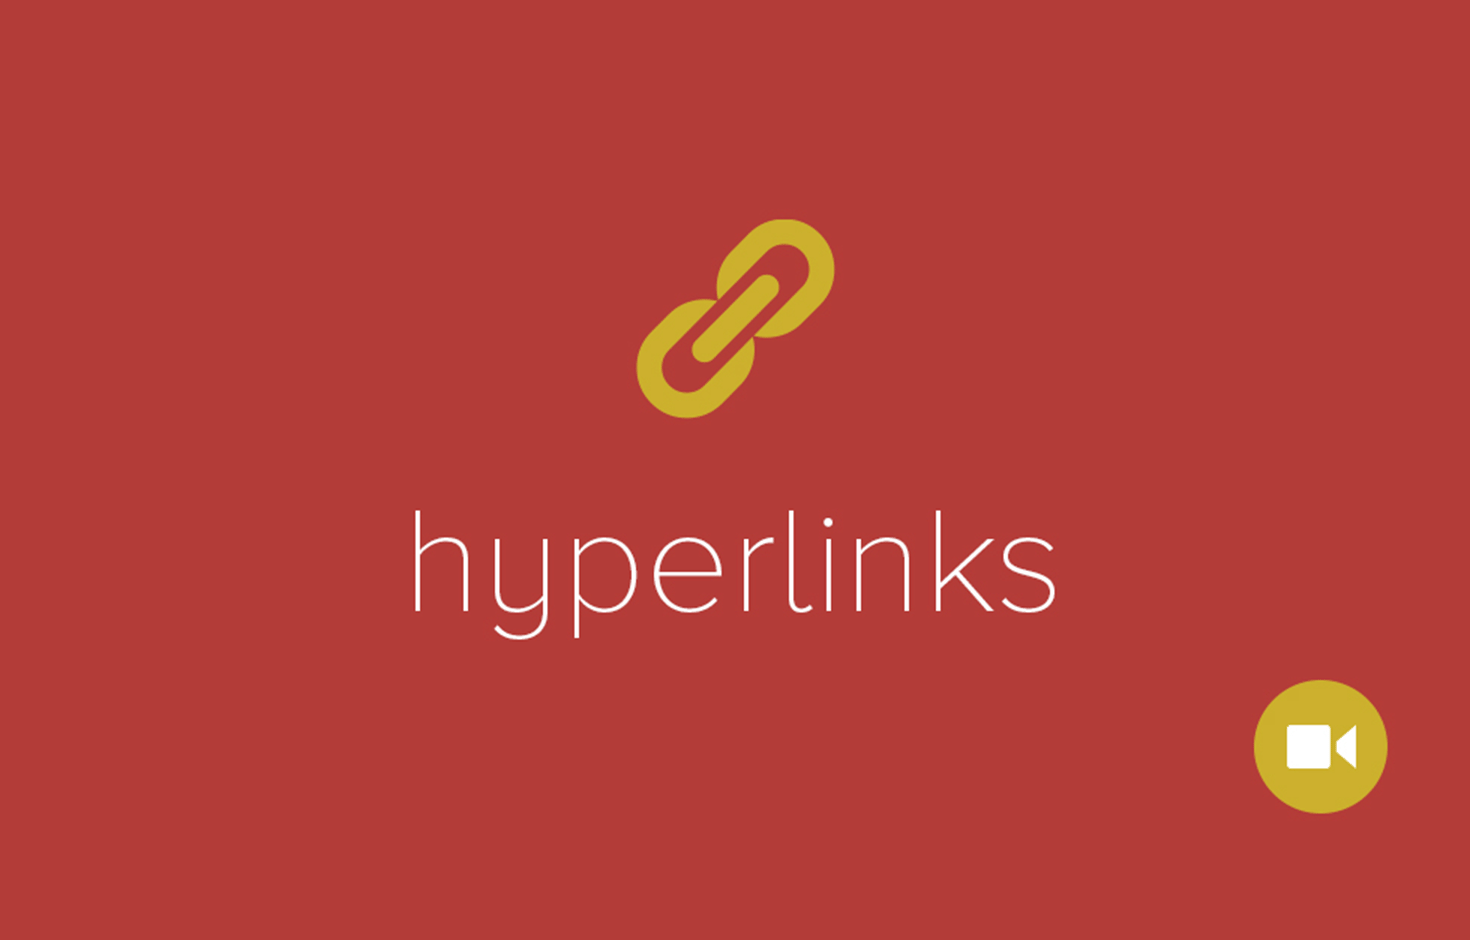 Link Types for Hyperlinks